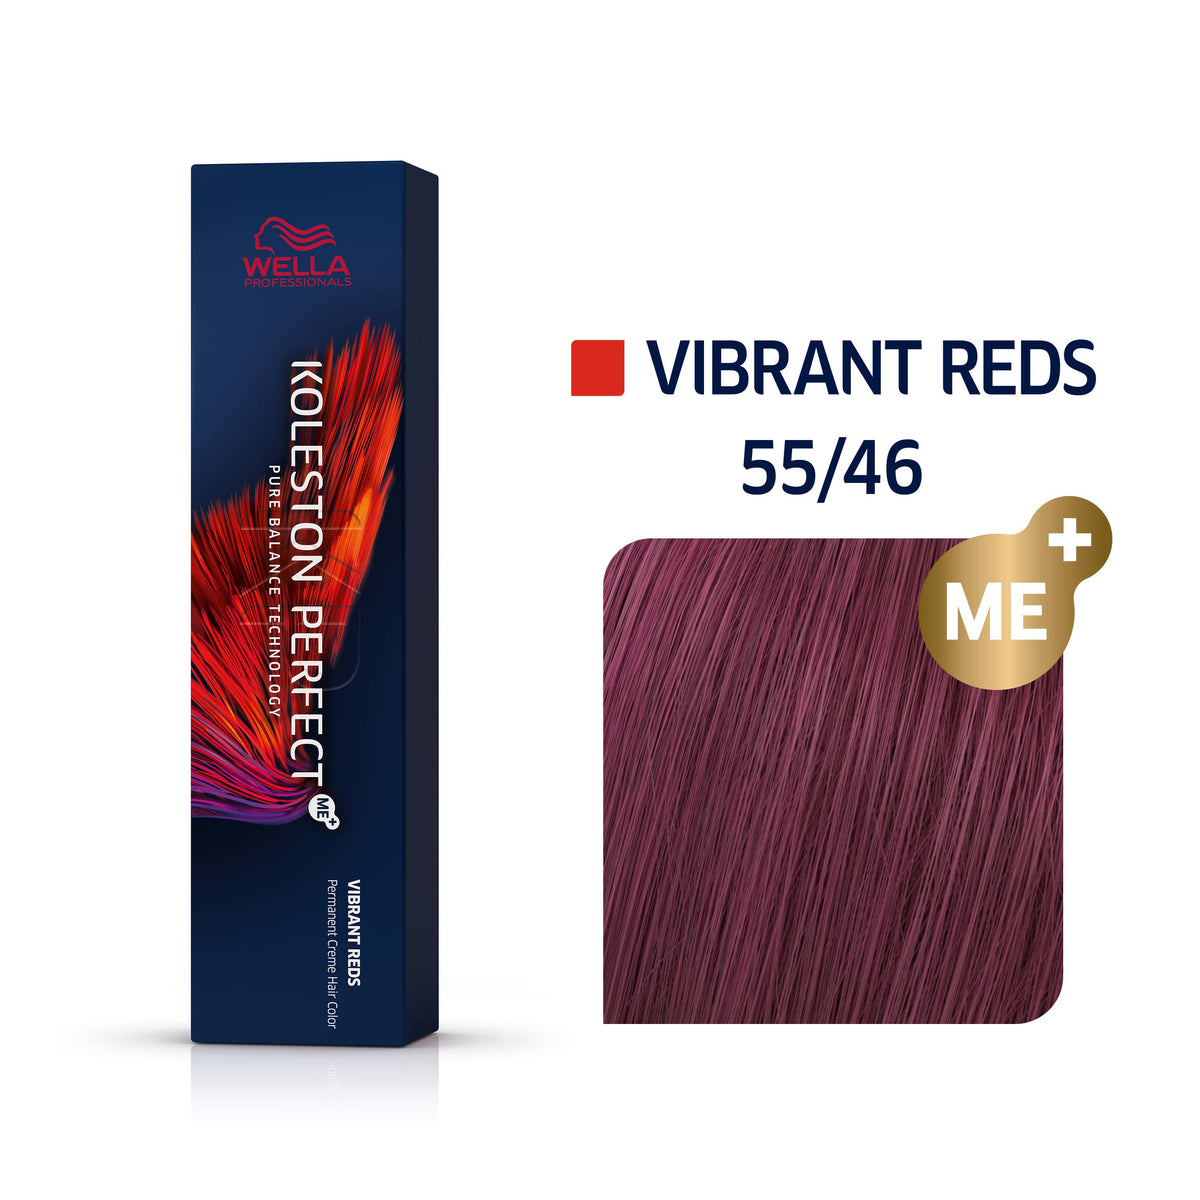 a box of wella vibrant reds 55 / 46